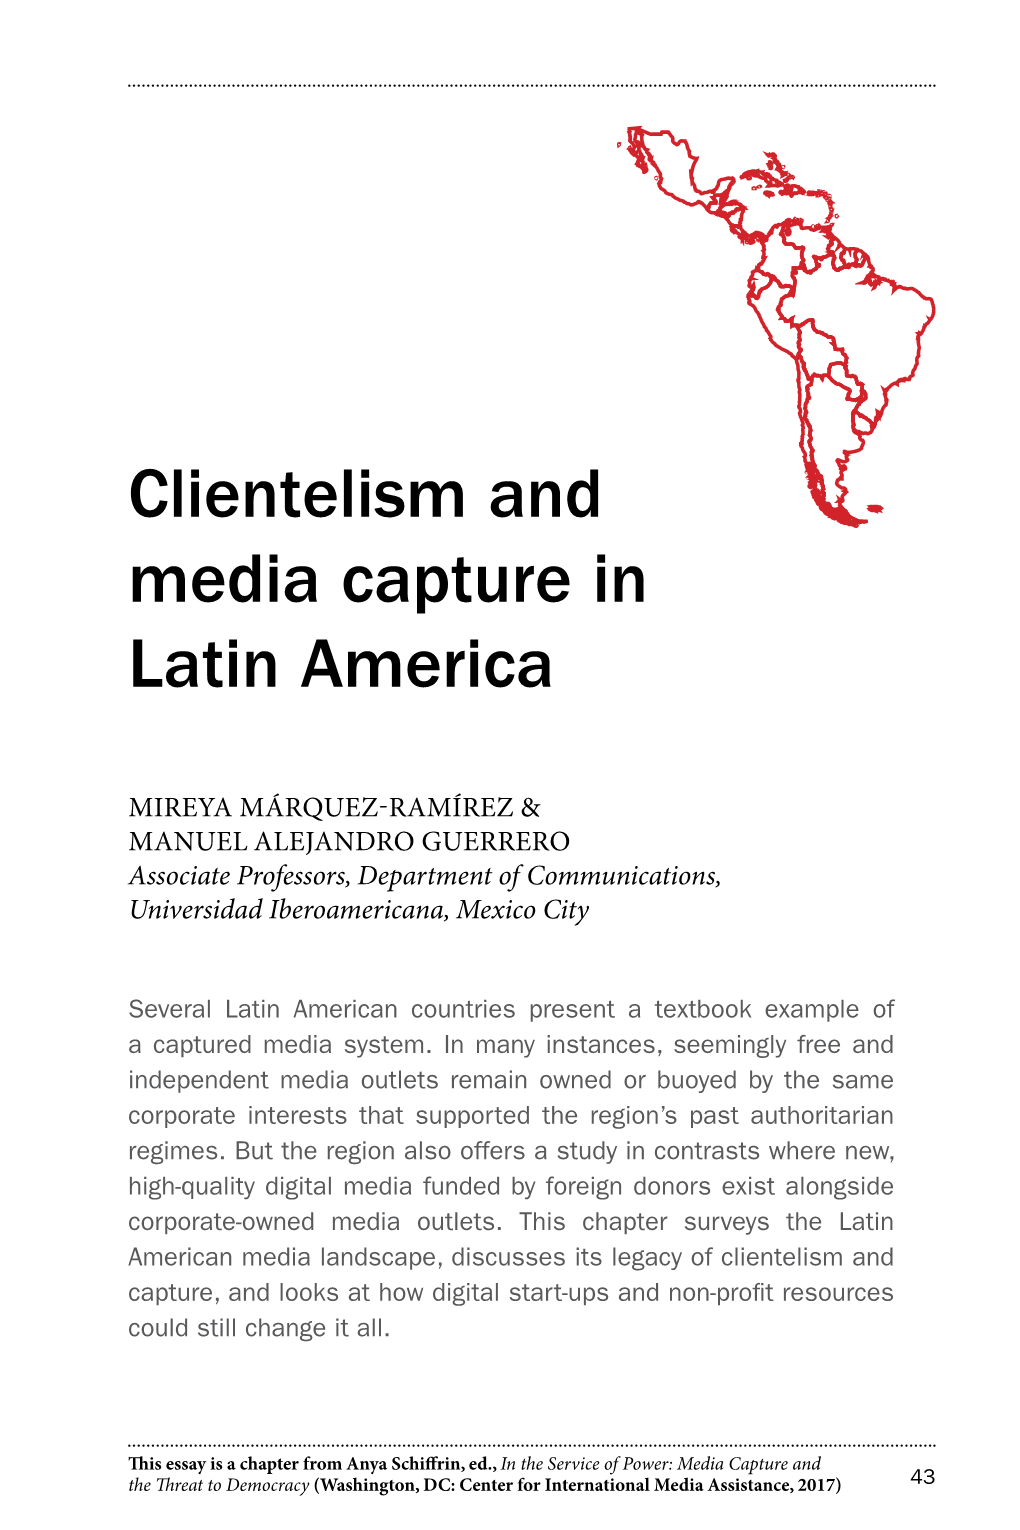 Clientelism and Media Capture in Latin America